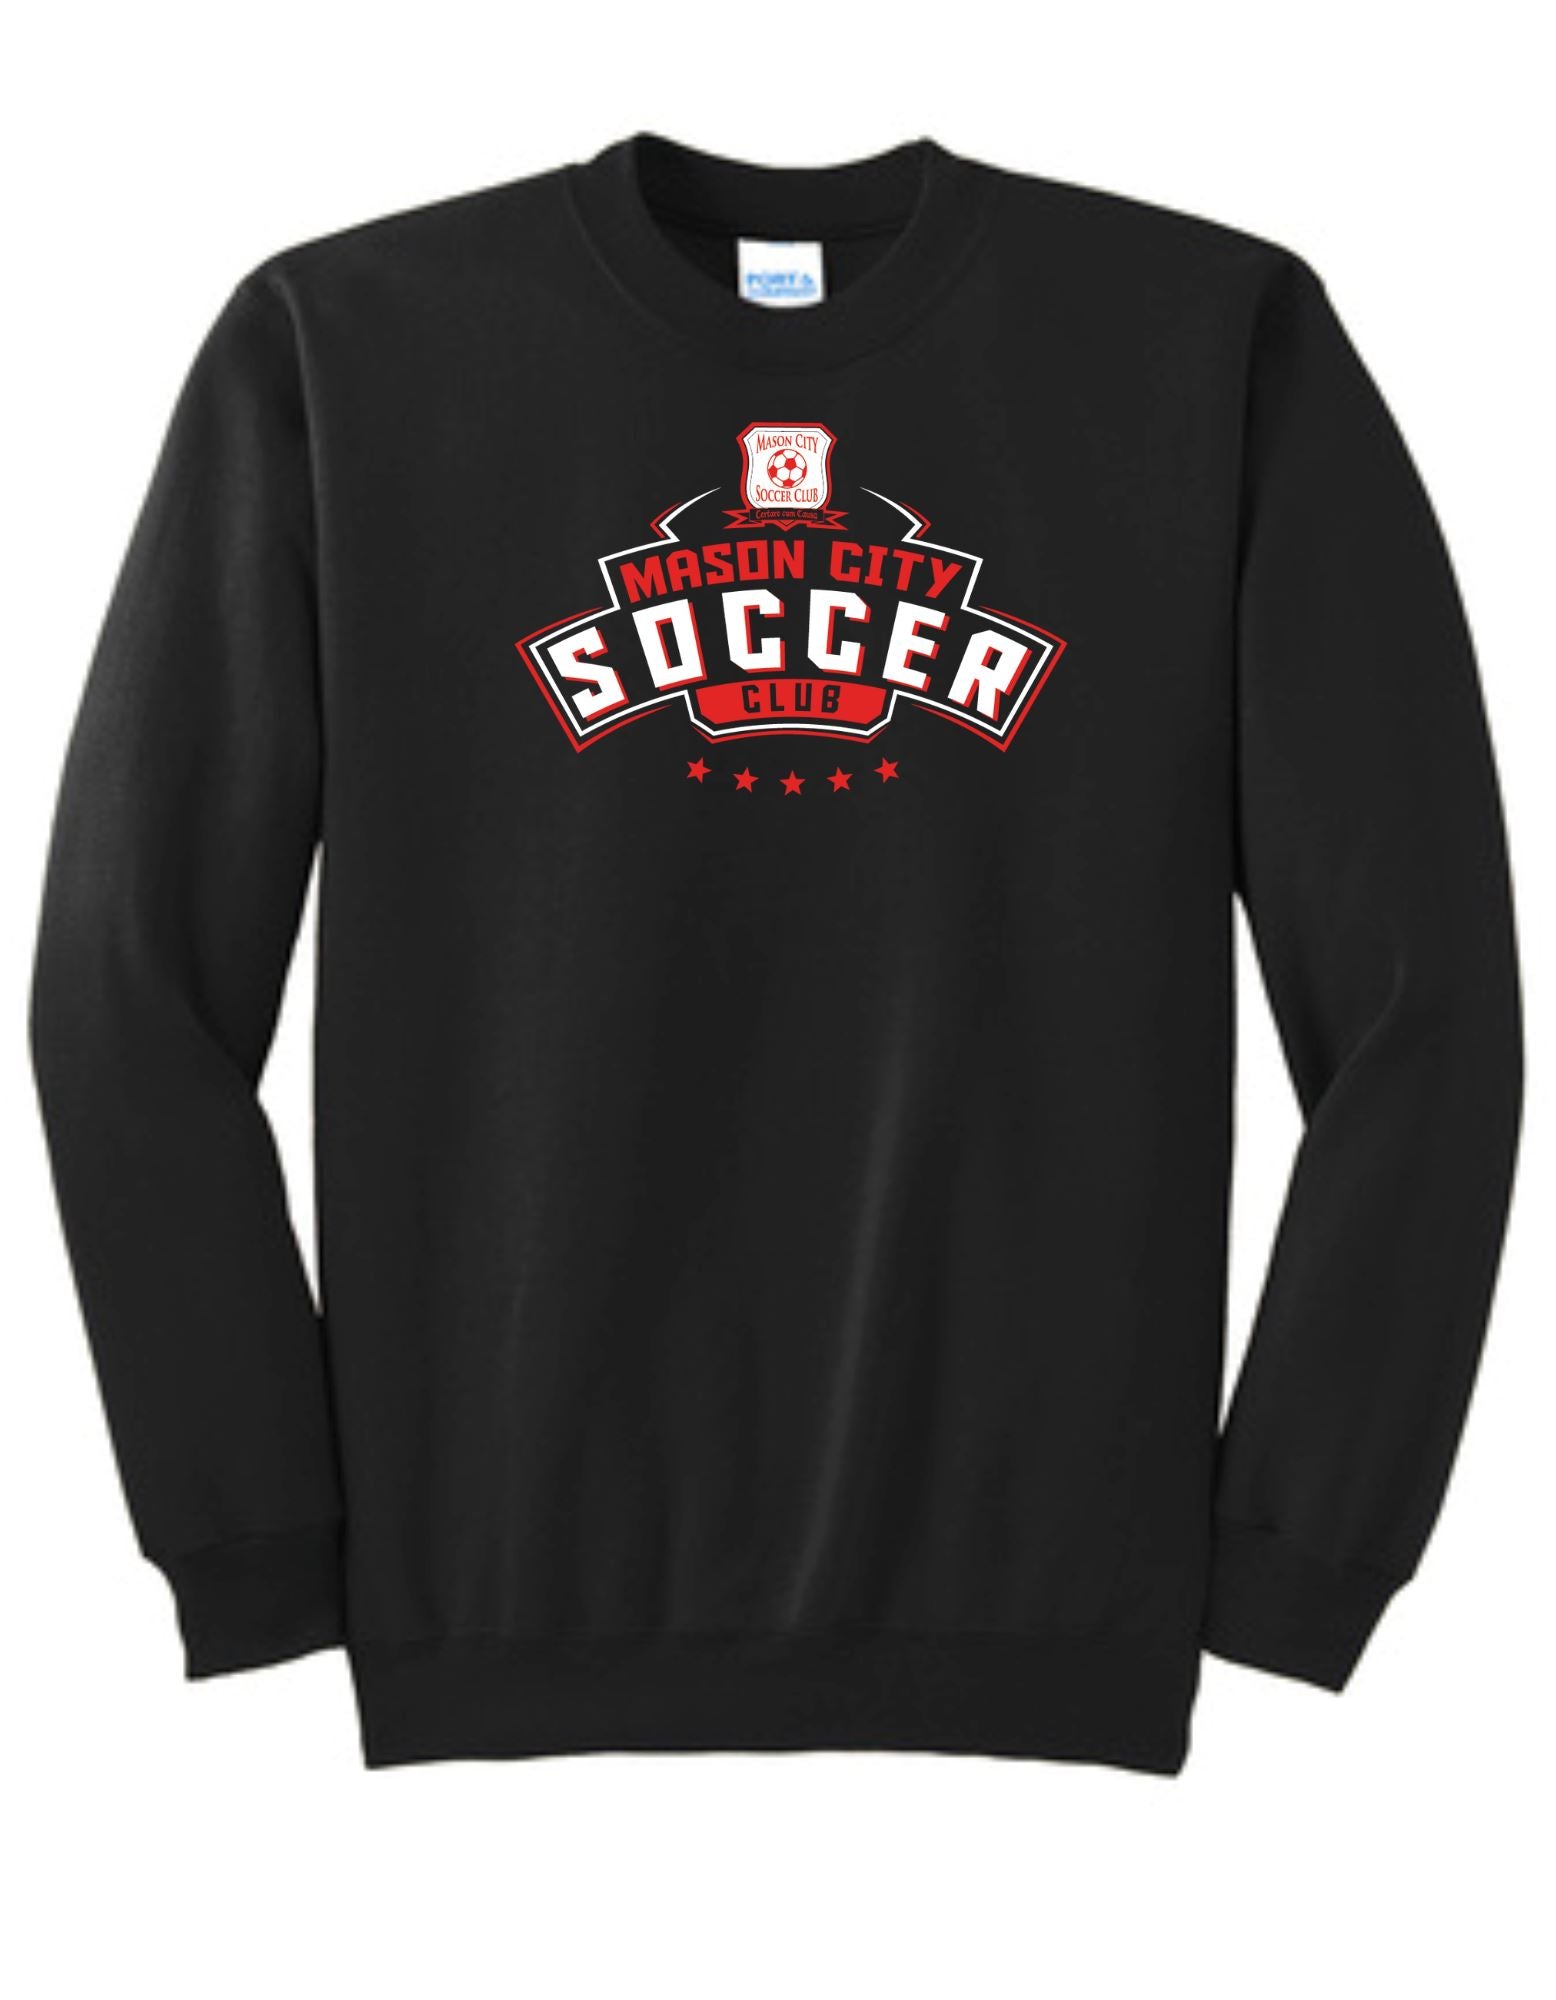 Mason City Soccer Club | Men's Crewneck Sweatshirt T-Shirt Goal Kick Soccer Small Black 